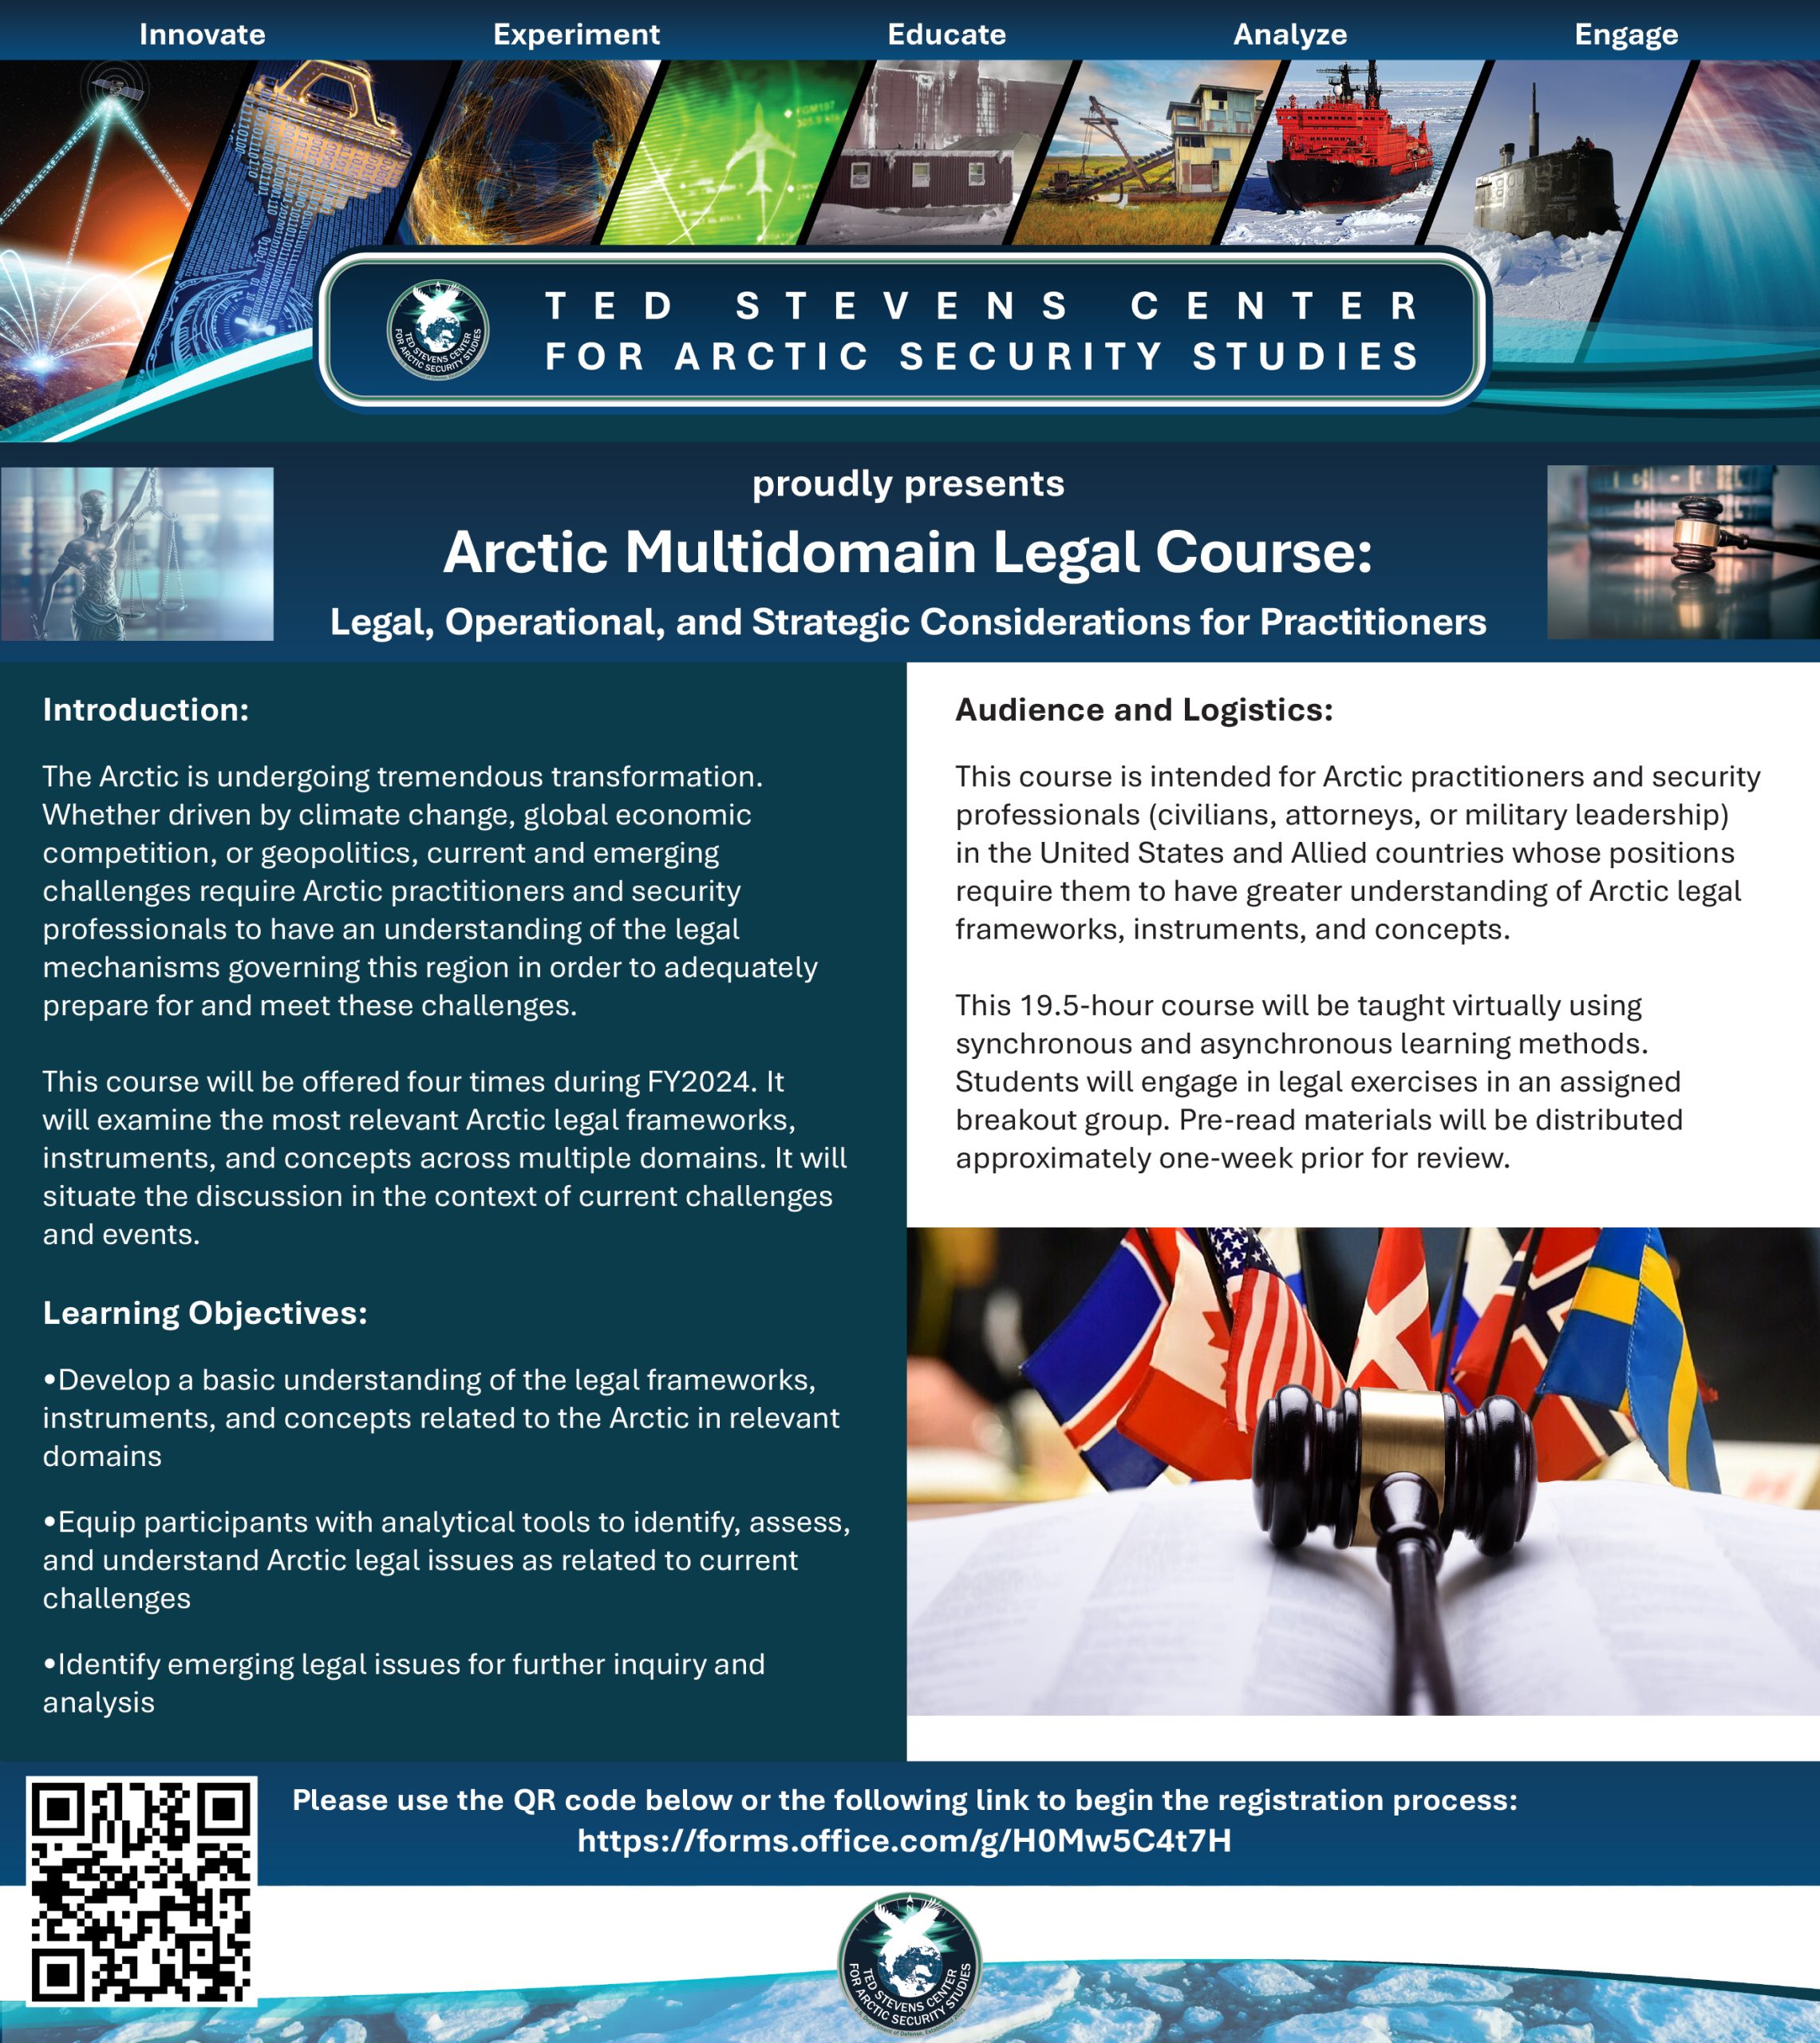 Arctic Multidomain Legal Course (ALMC) flyer.